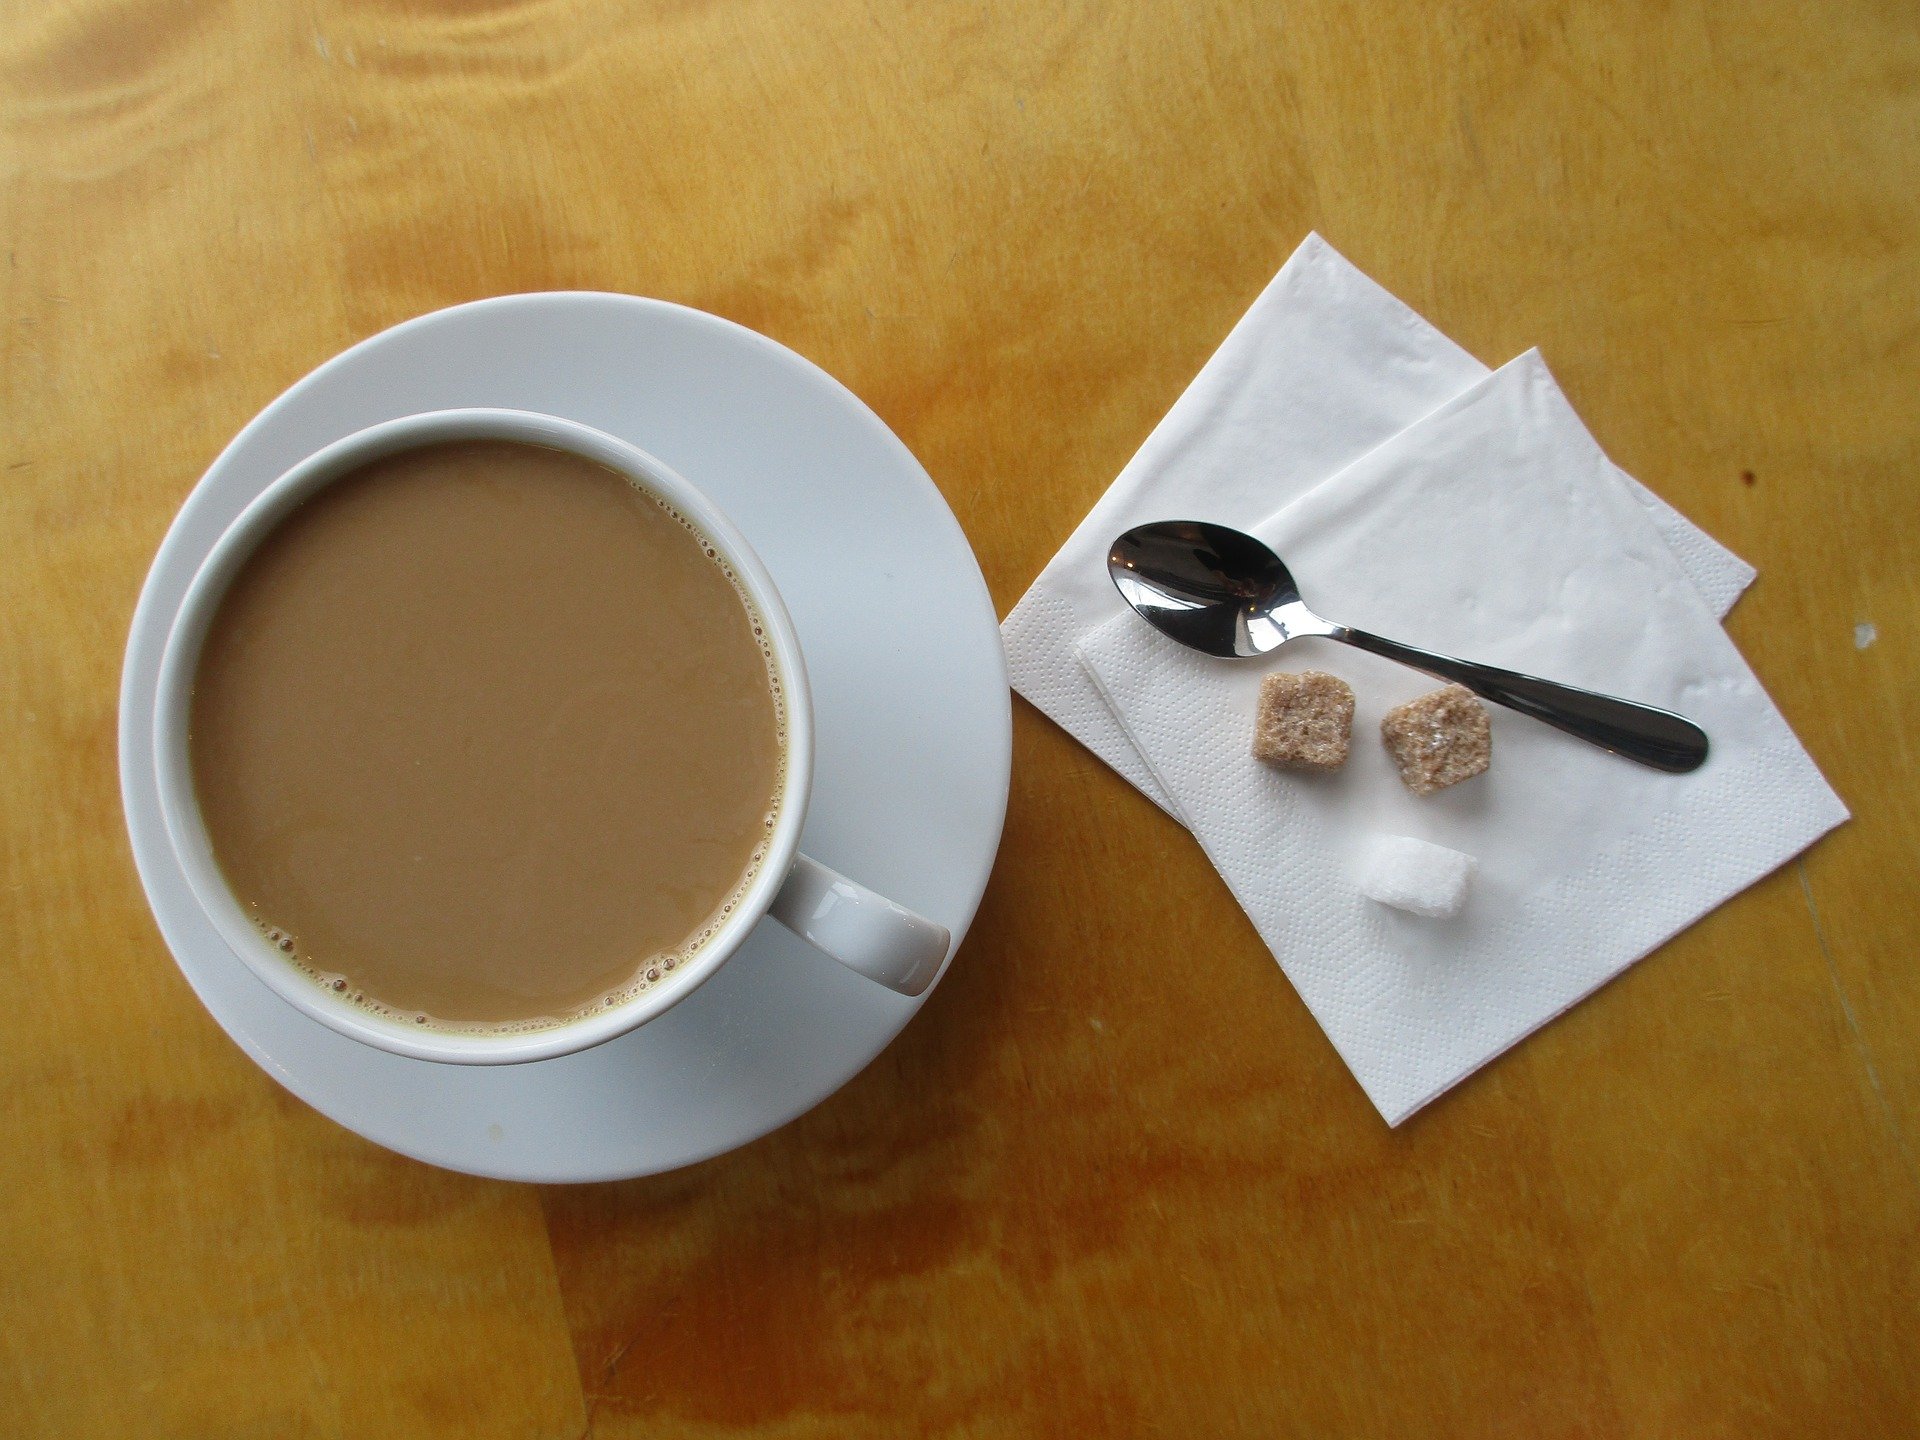 Café con leche, cómo hacerlo para que quede riquísimo ✅.